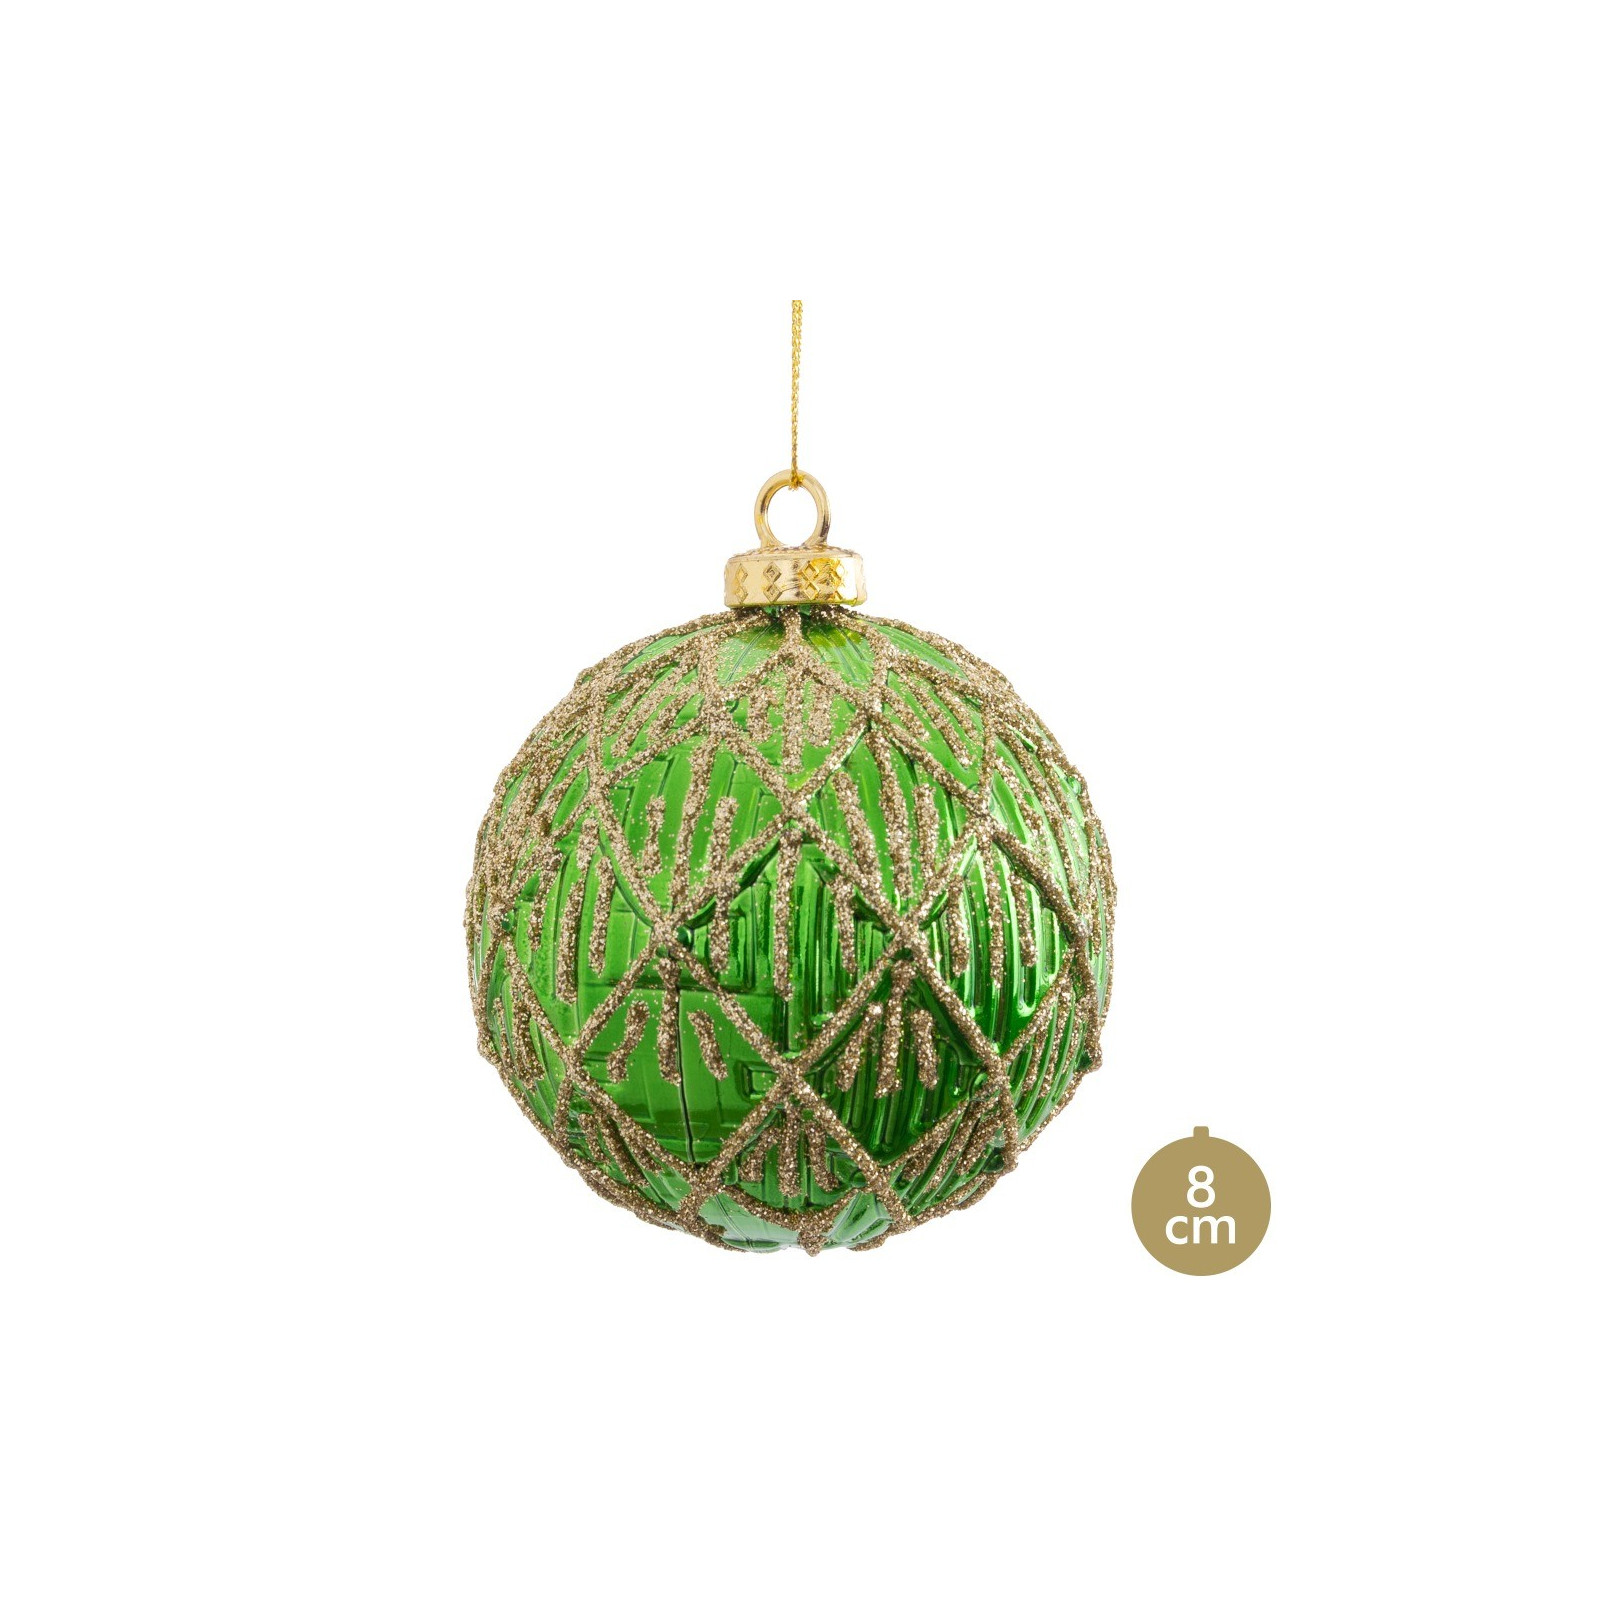 Bola verde decorada 8 x 8 x 8 cm